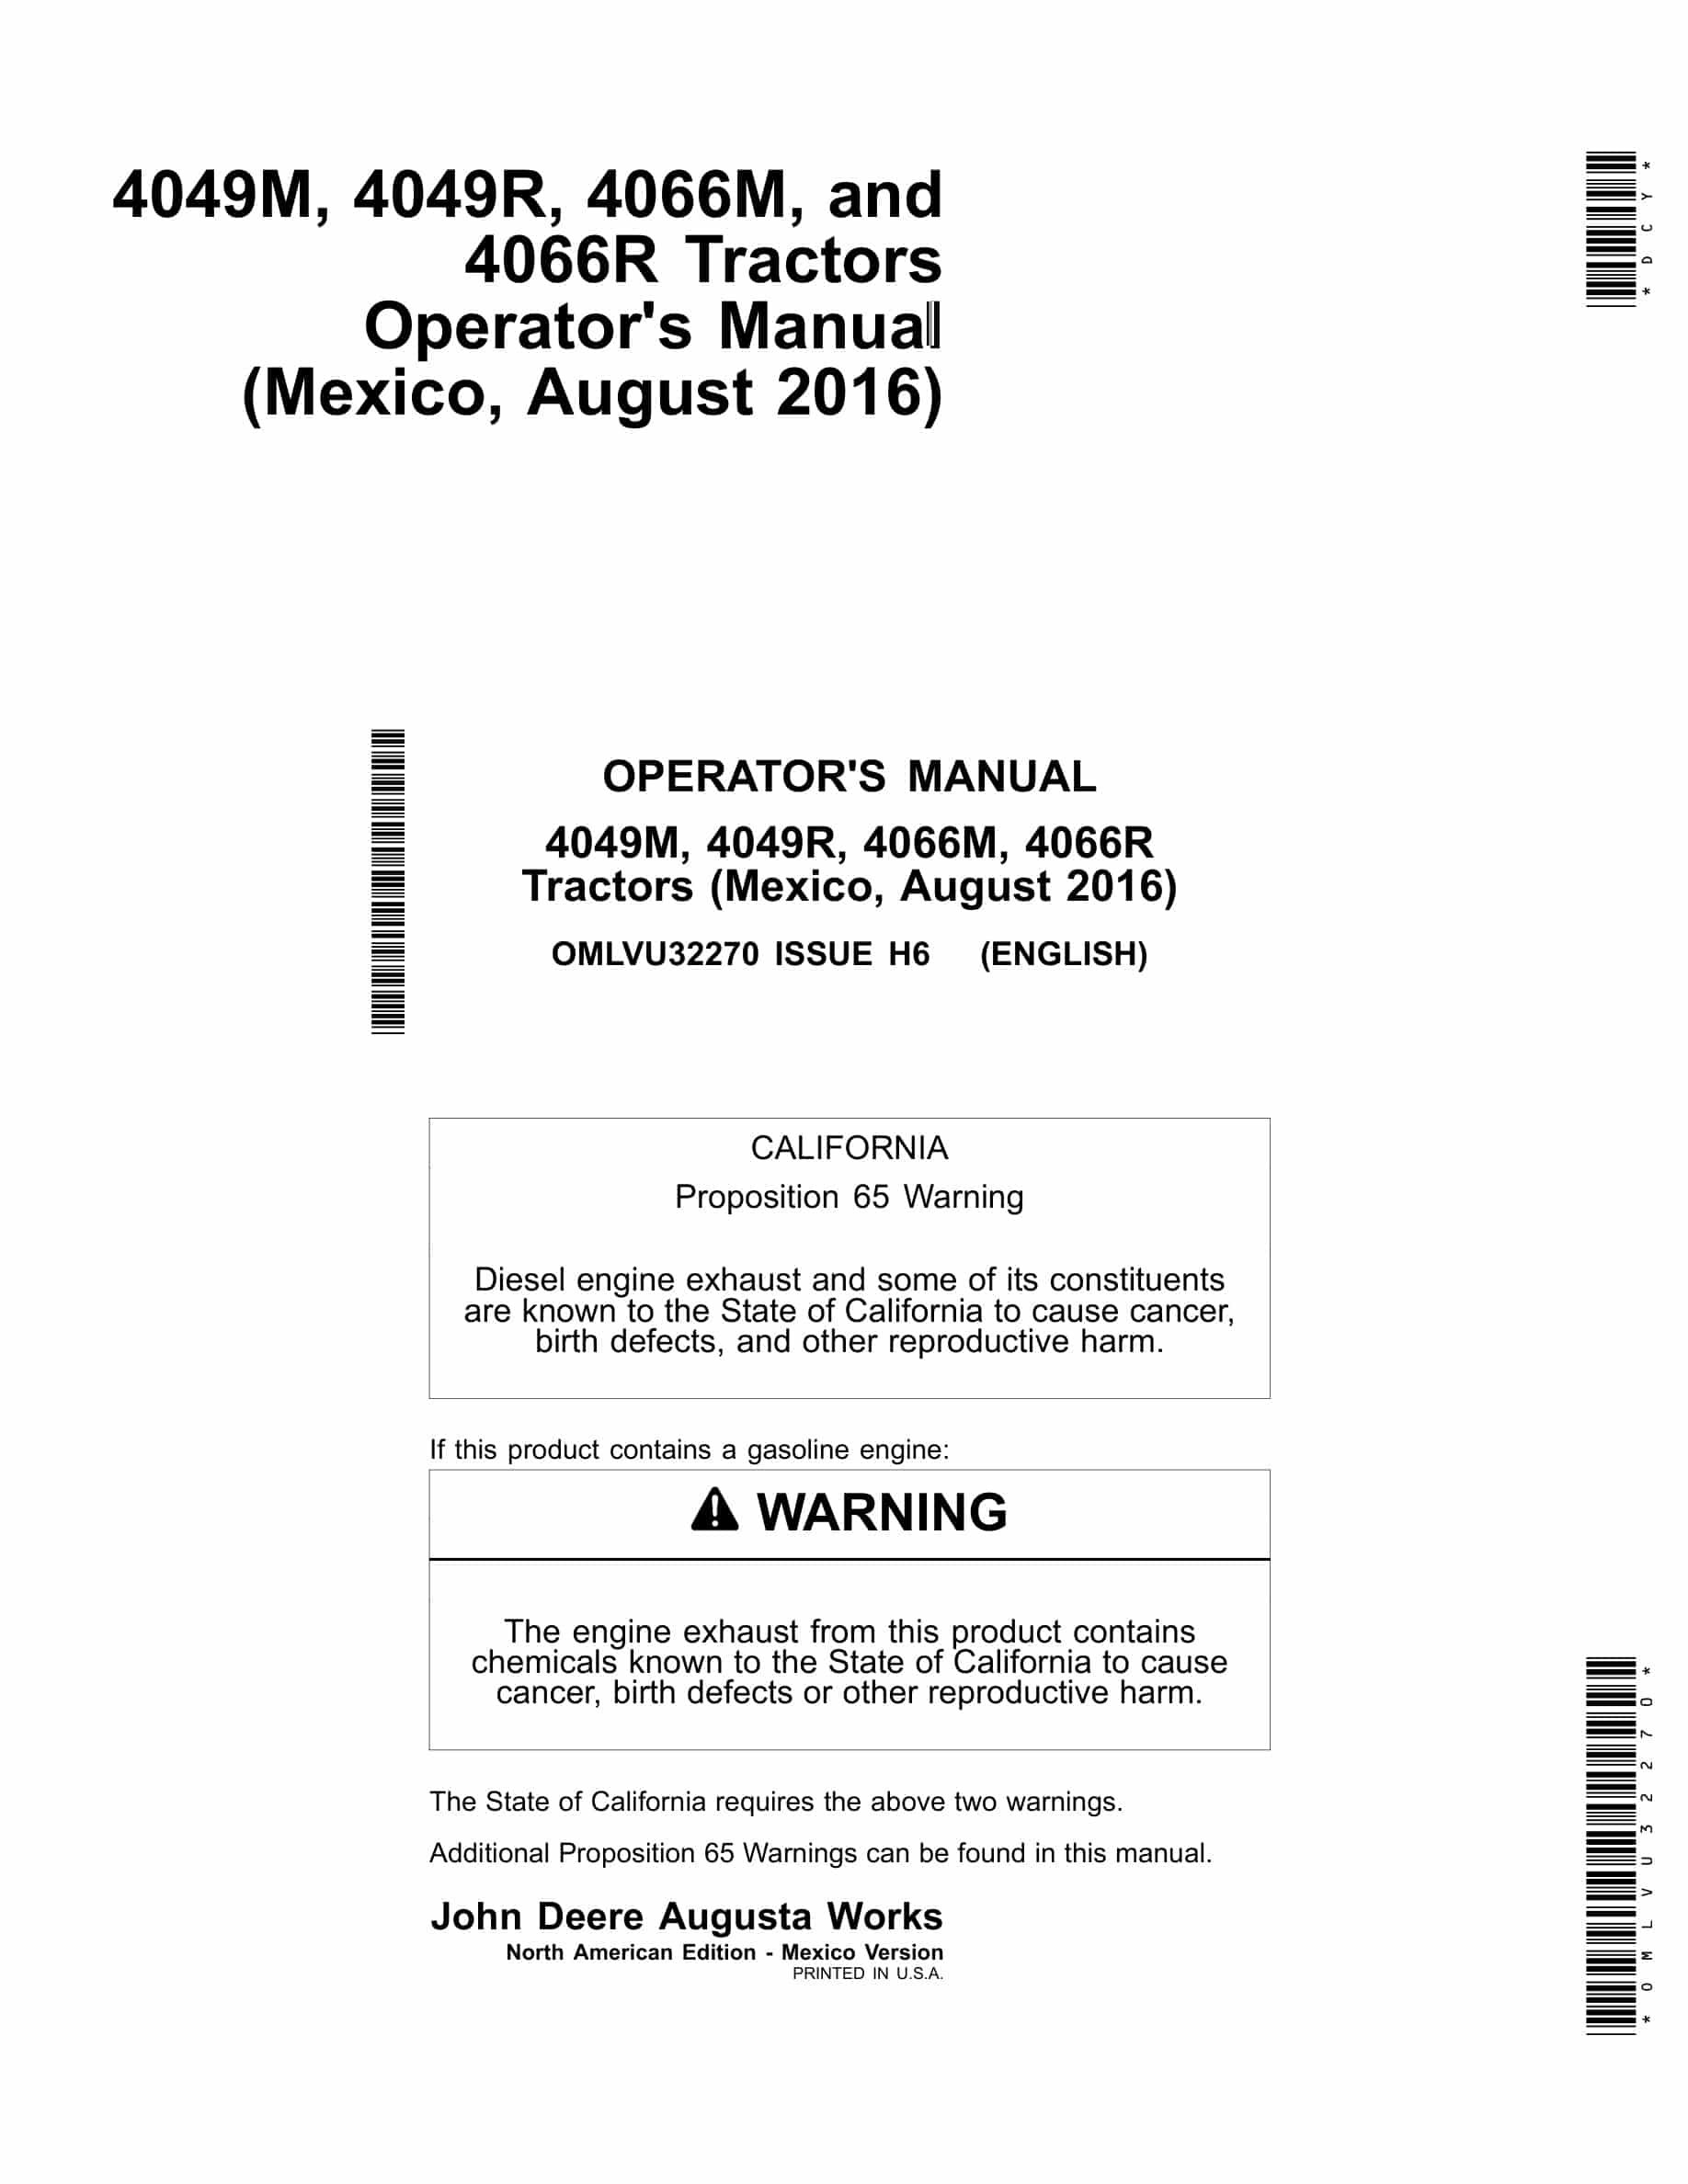 John Deere 4049M, 4049R, 4066M, 4066R Tractor Operator Manual OMLVU32270-1